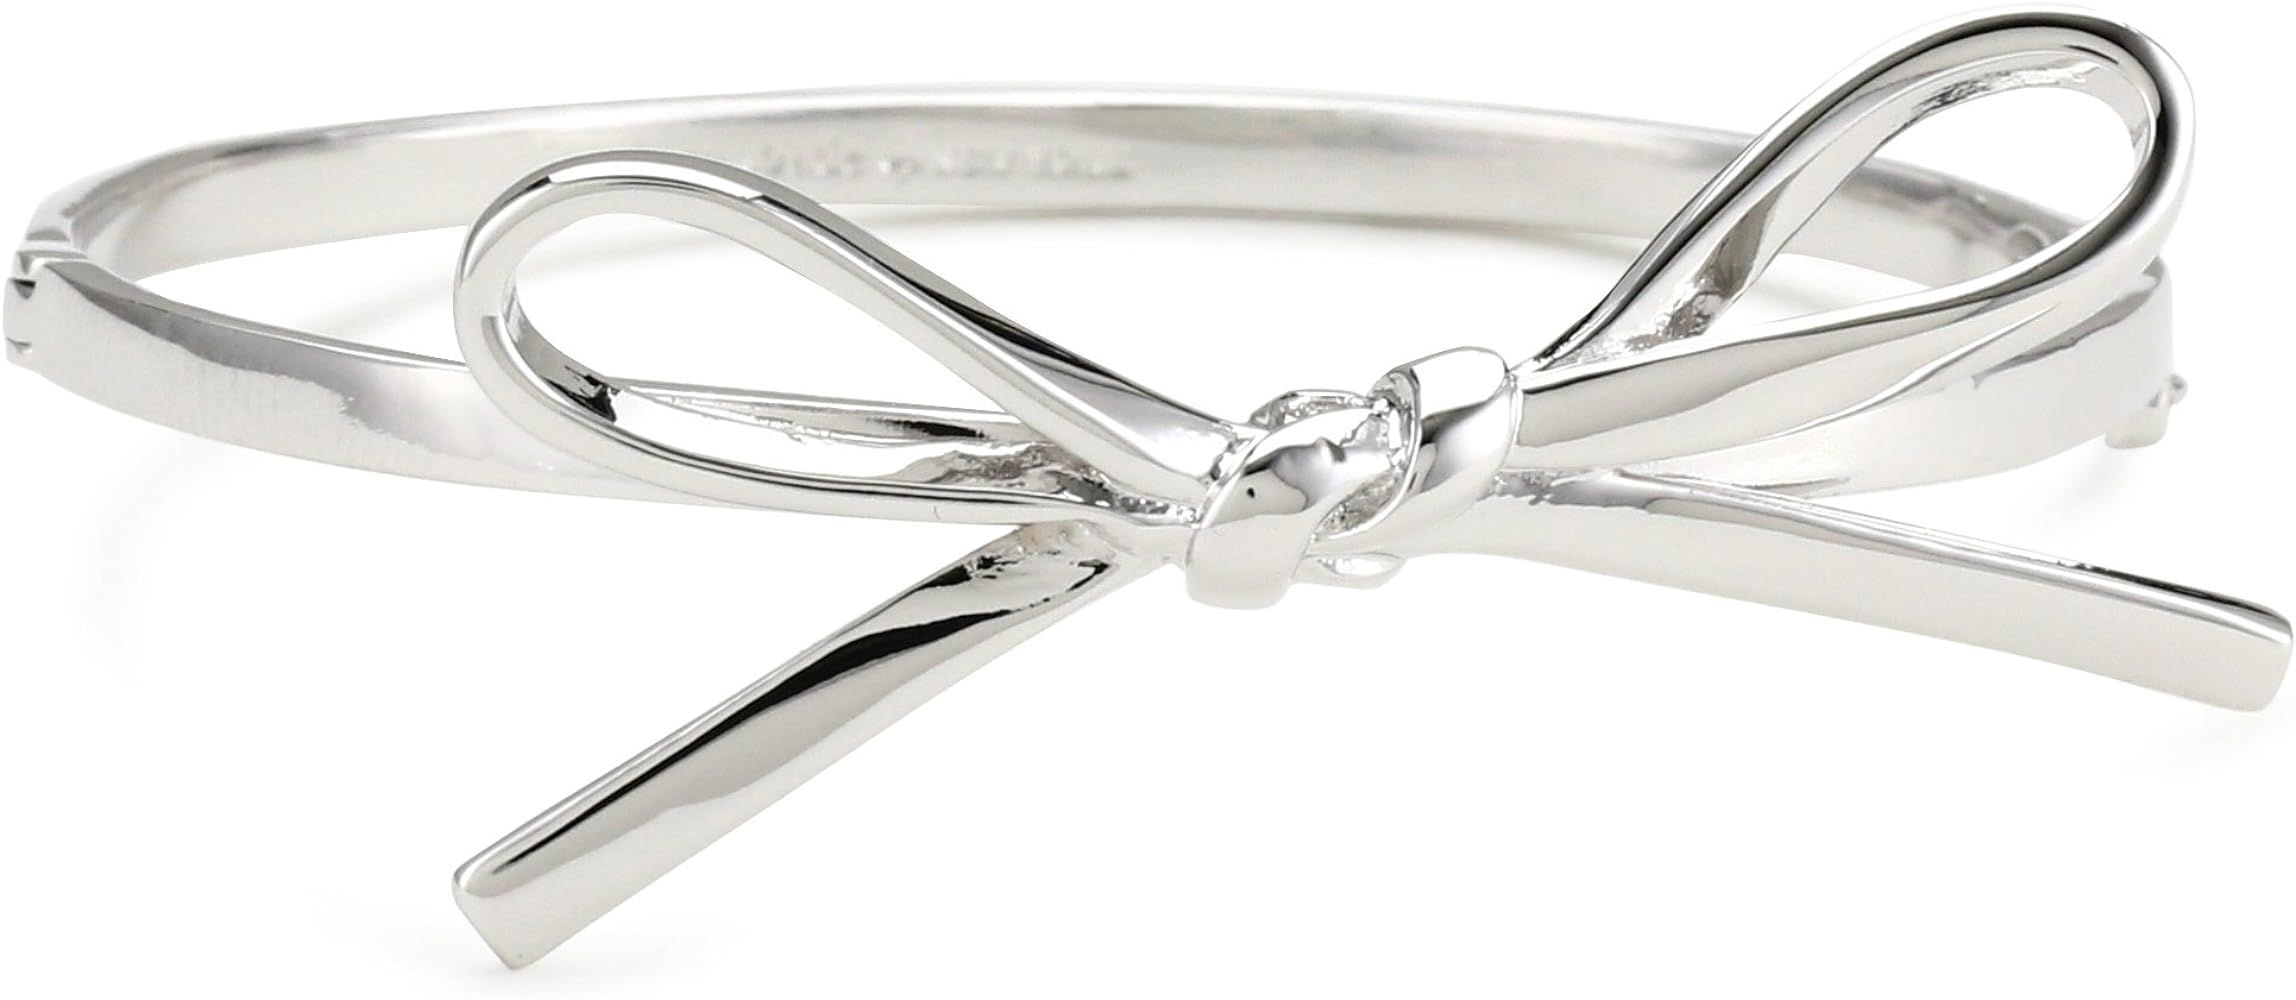 kate spade new york "Skinny Mini" Silver-Tone Bow Bangle Bracelet | Amazon (US)